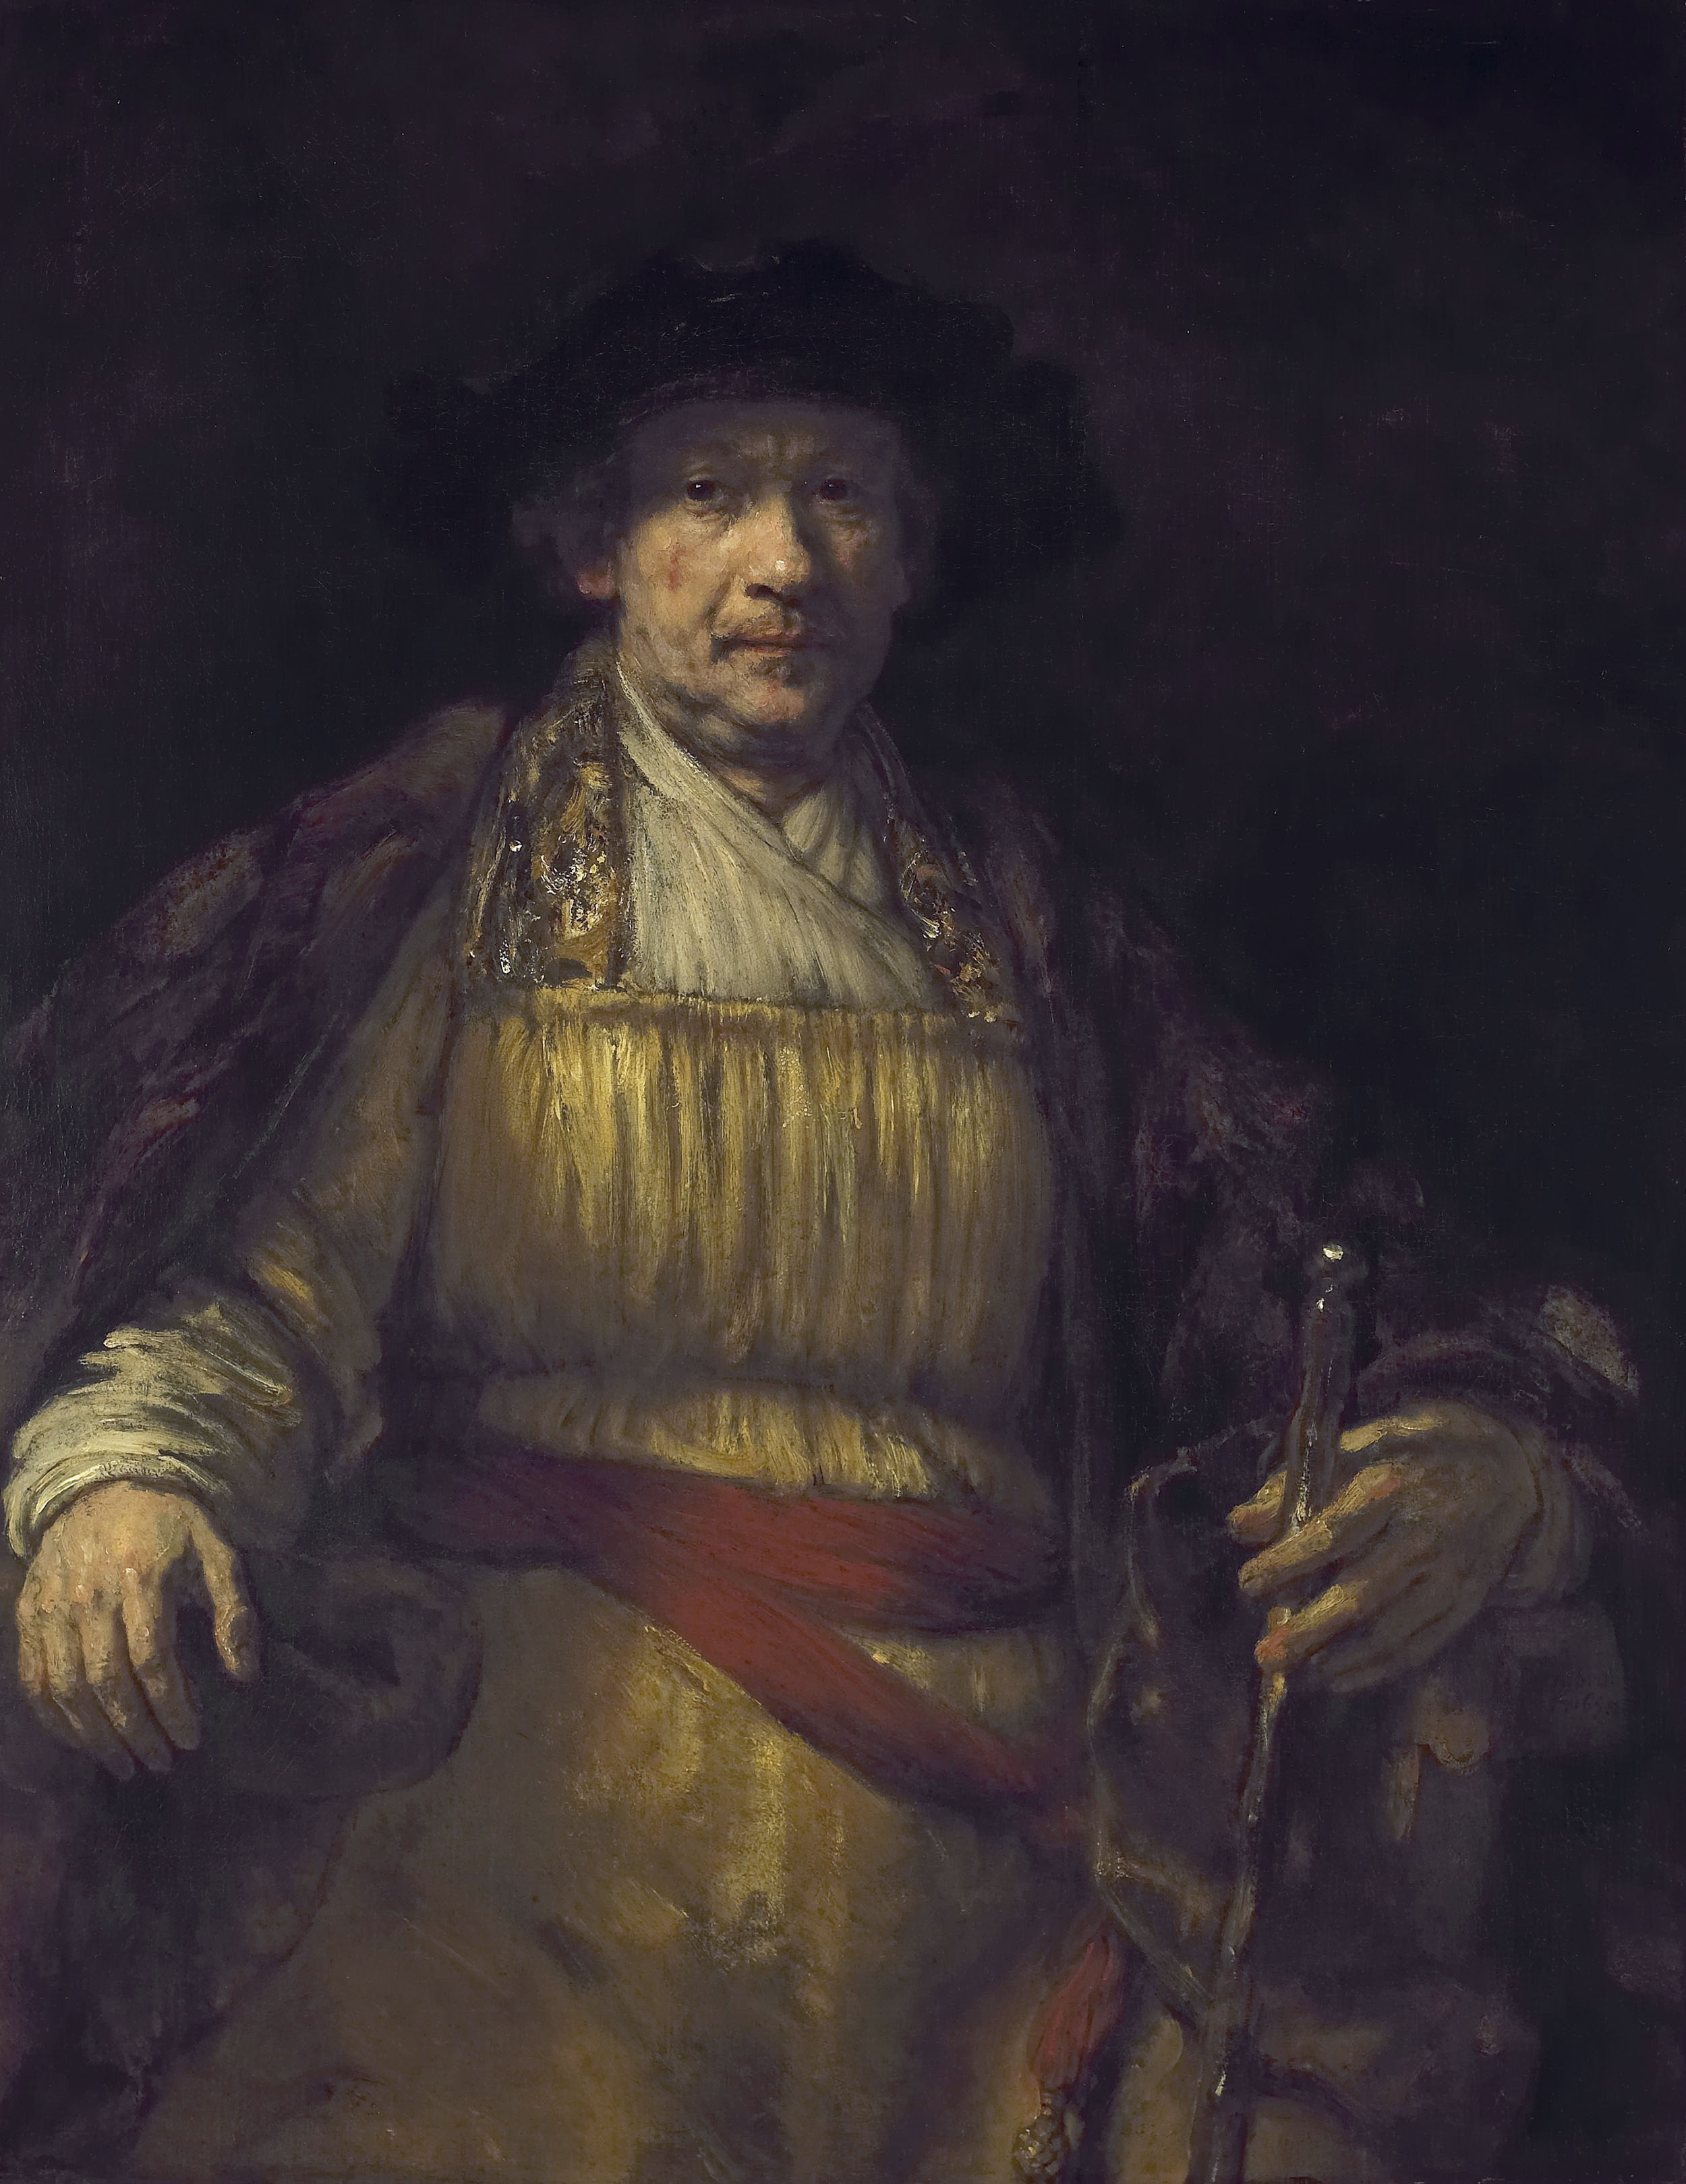 Рембрандт ван Рейн. "Автопортрет". 1658.